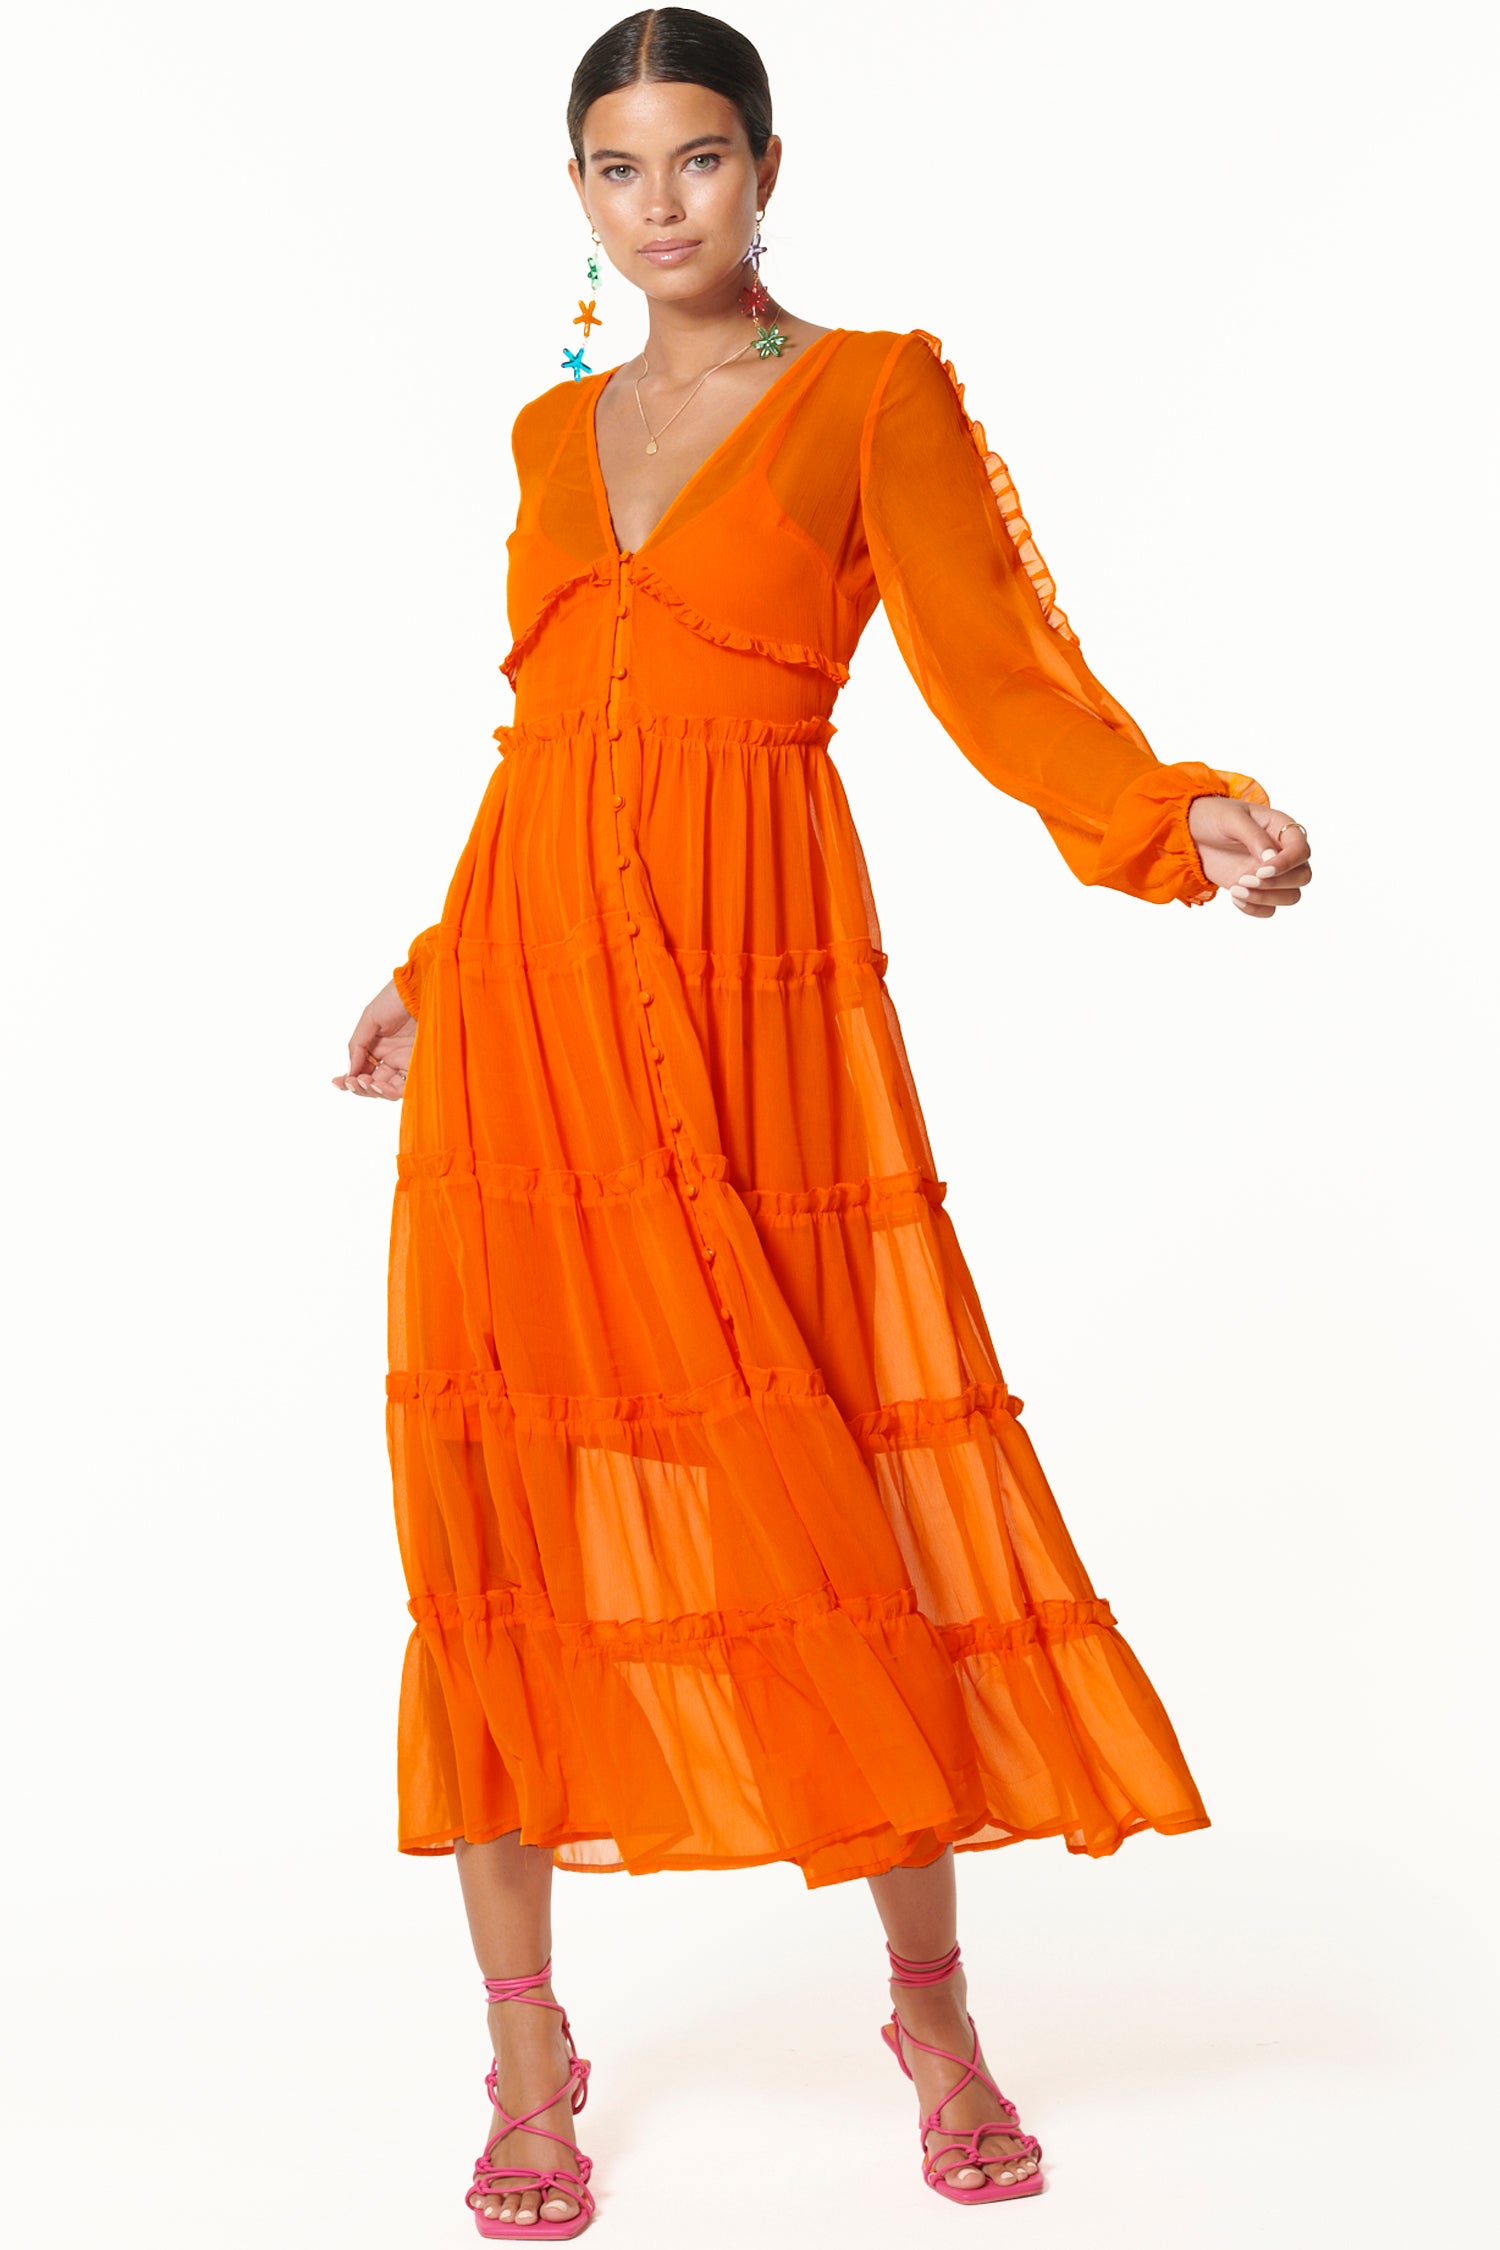 Model wearing Orange Clemmie Dress facing the camera